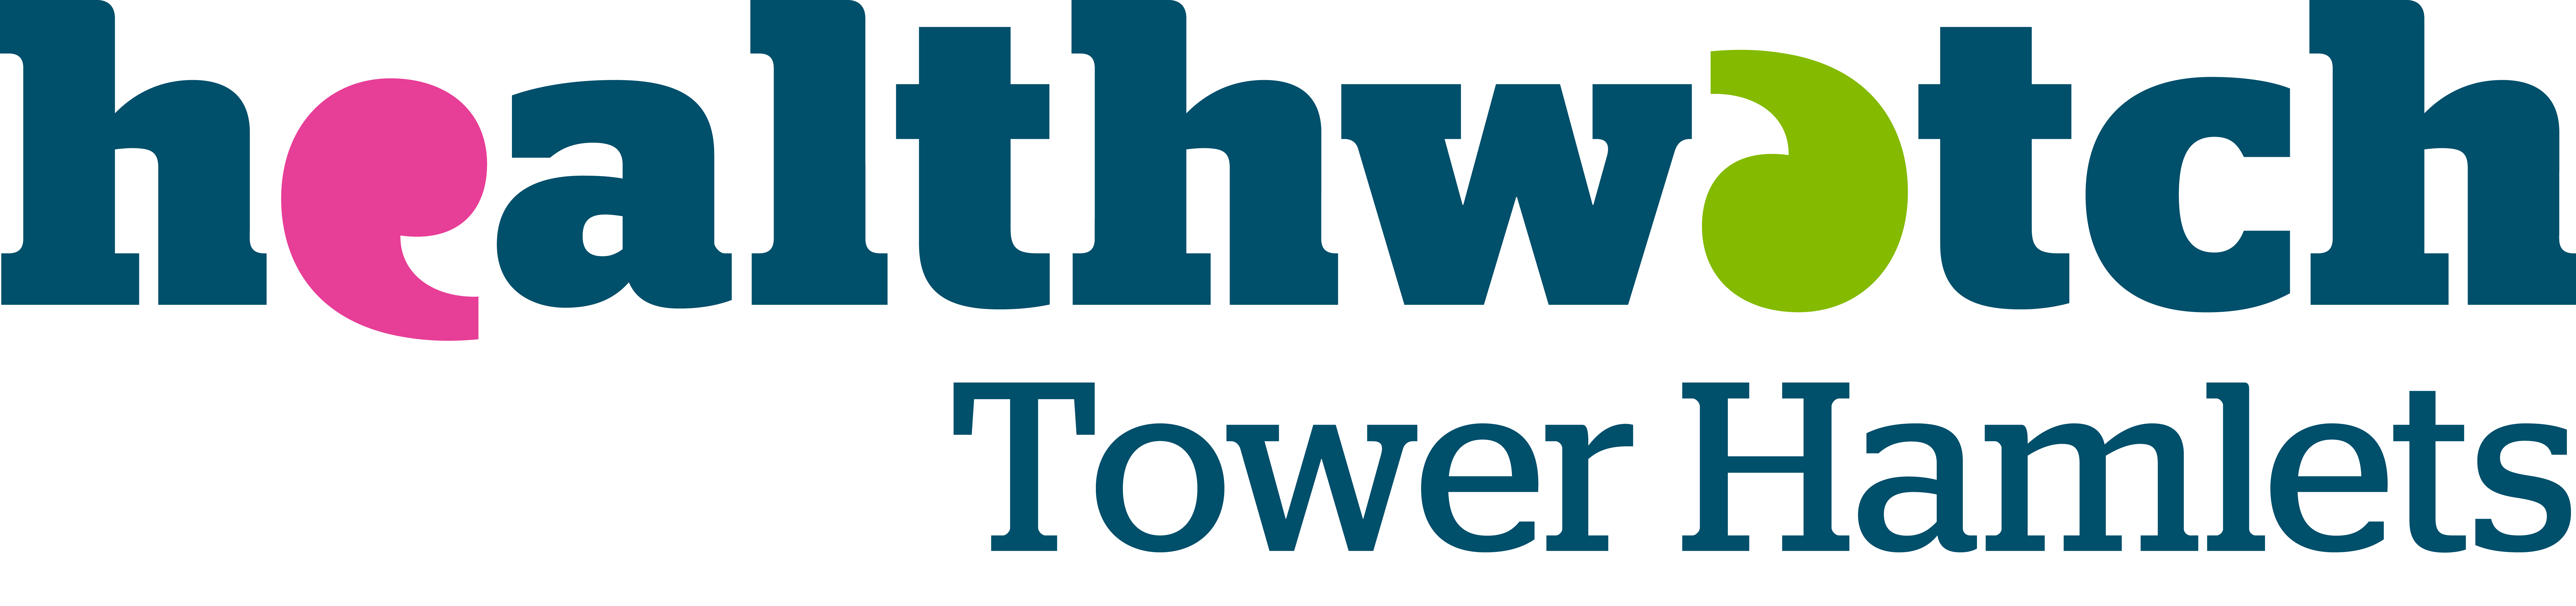 Healthwatch Tower Hamlets Logo